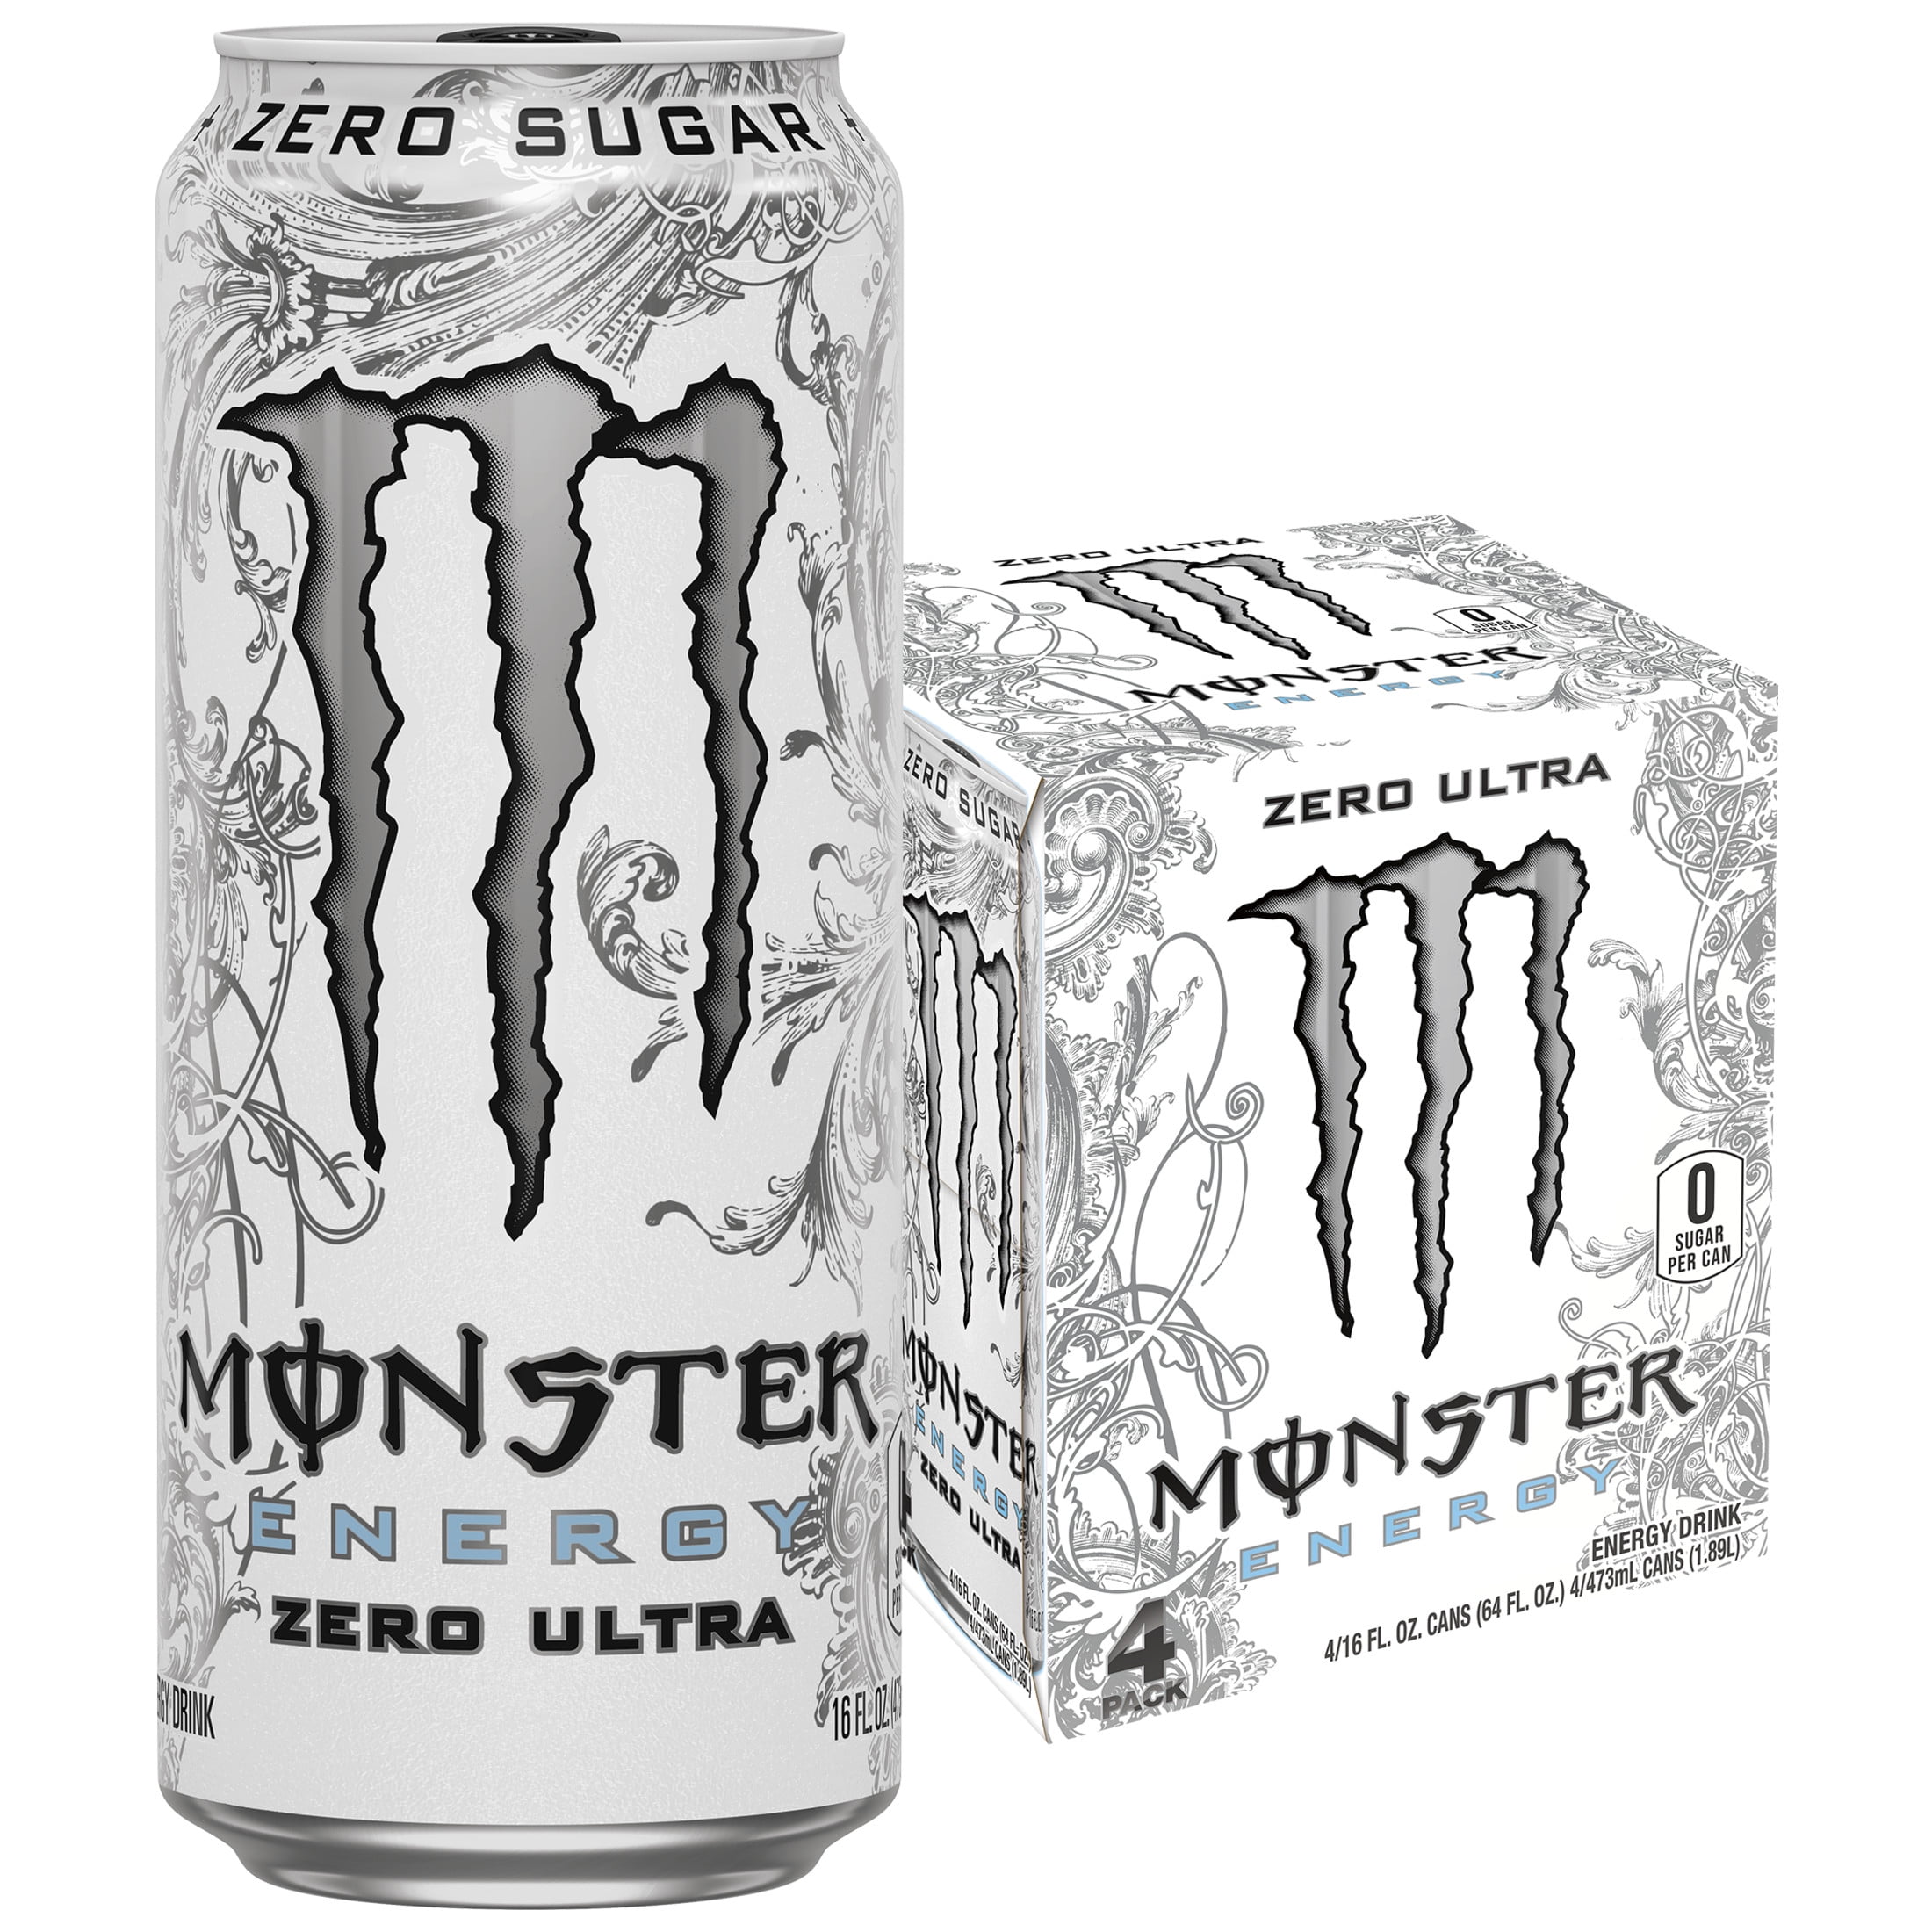 (4 Cans) Monster Zero Ultra, Sugar Free Energy Drink, 16 fl oz